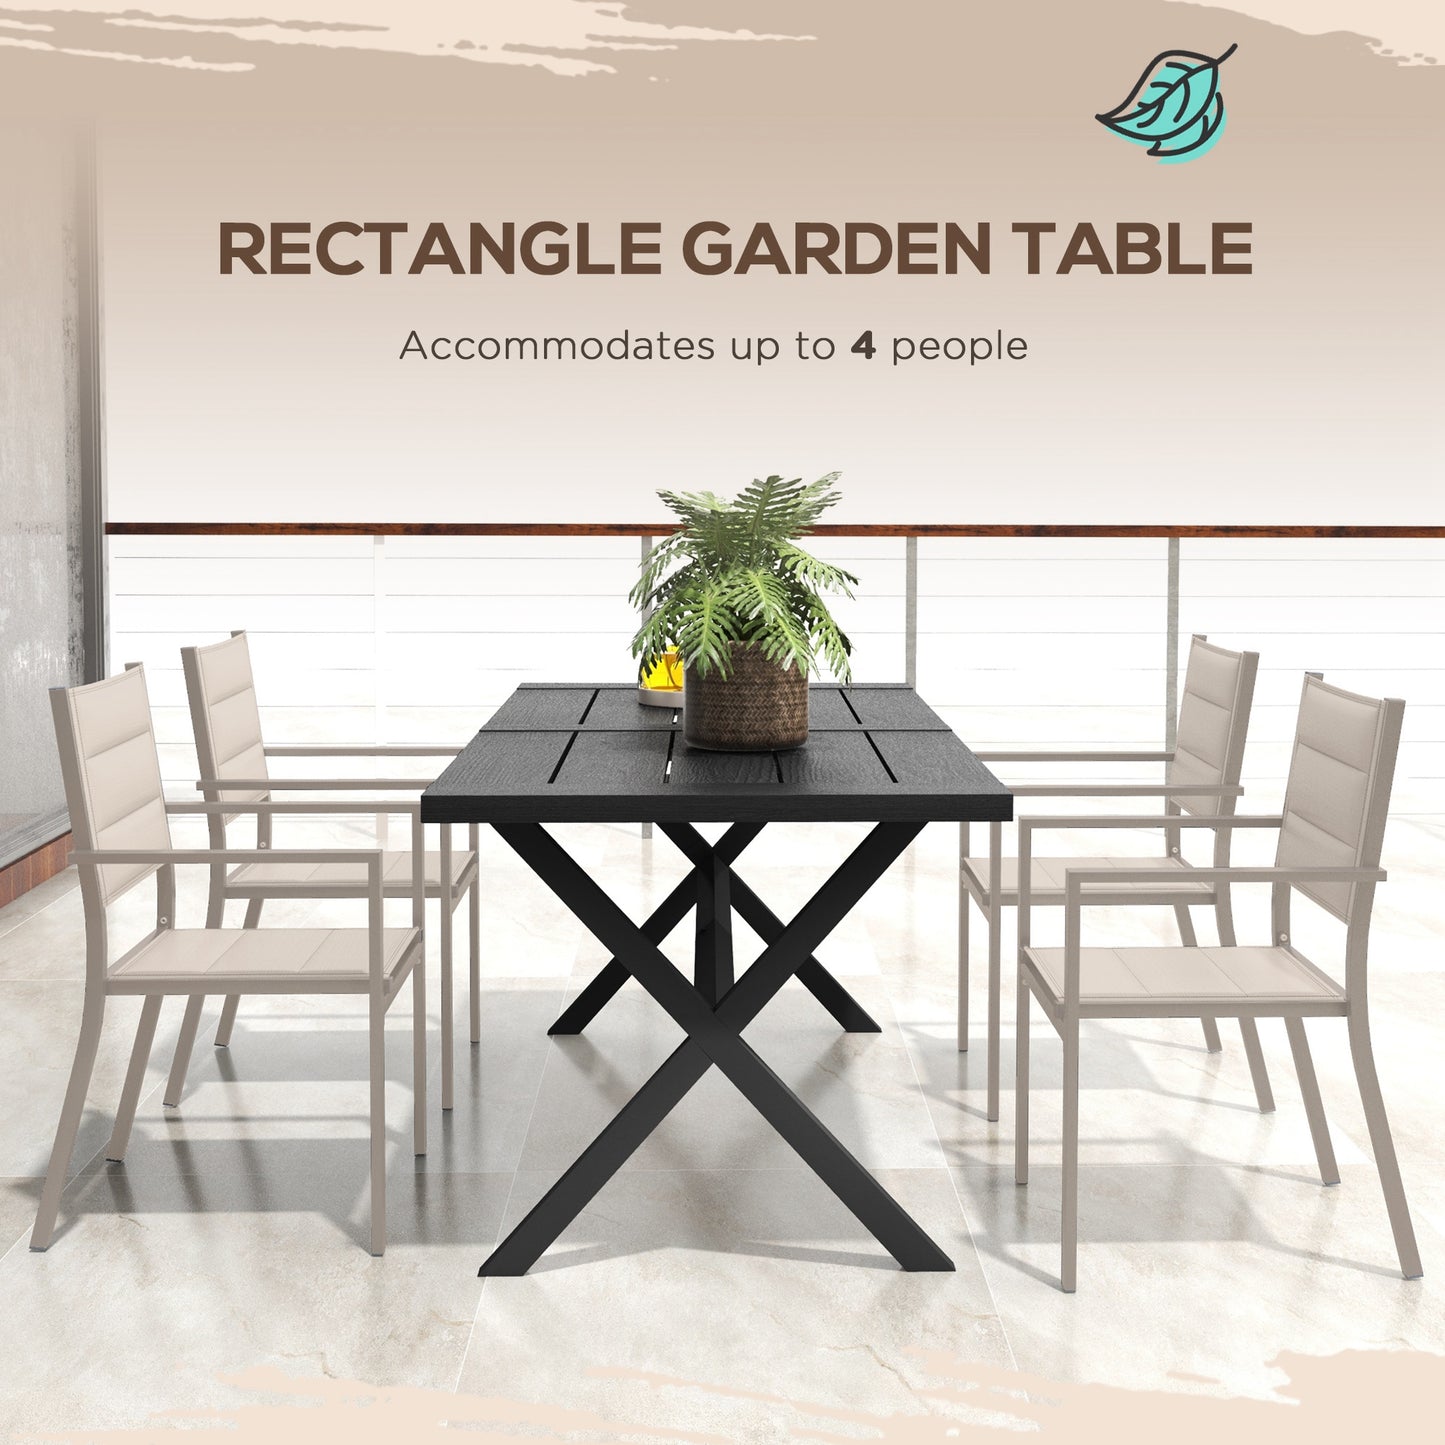 71" Outdoor Dining Table with X Shape Legs, Aluminium Frame Rectangular Darden Table for 4, for Backyard, Black